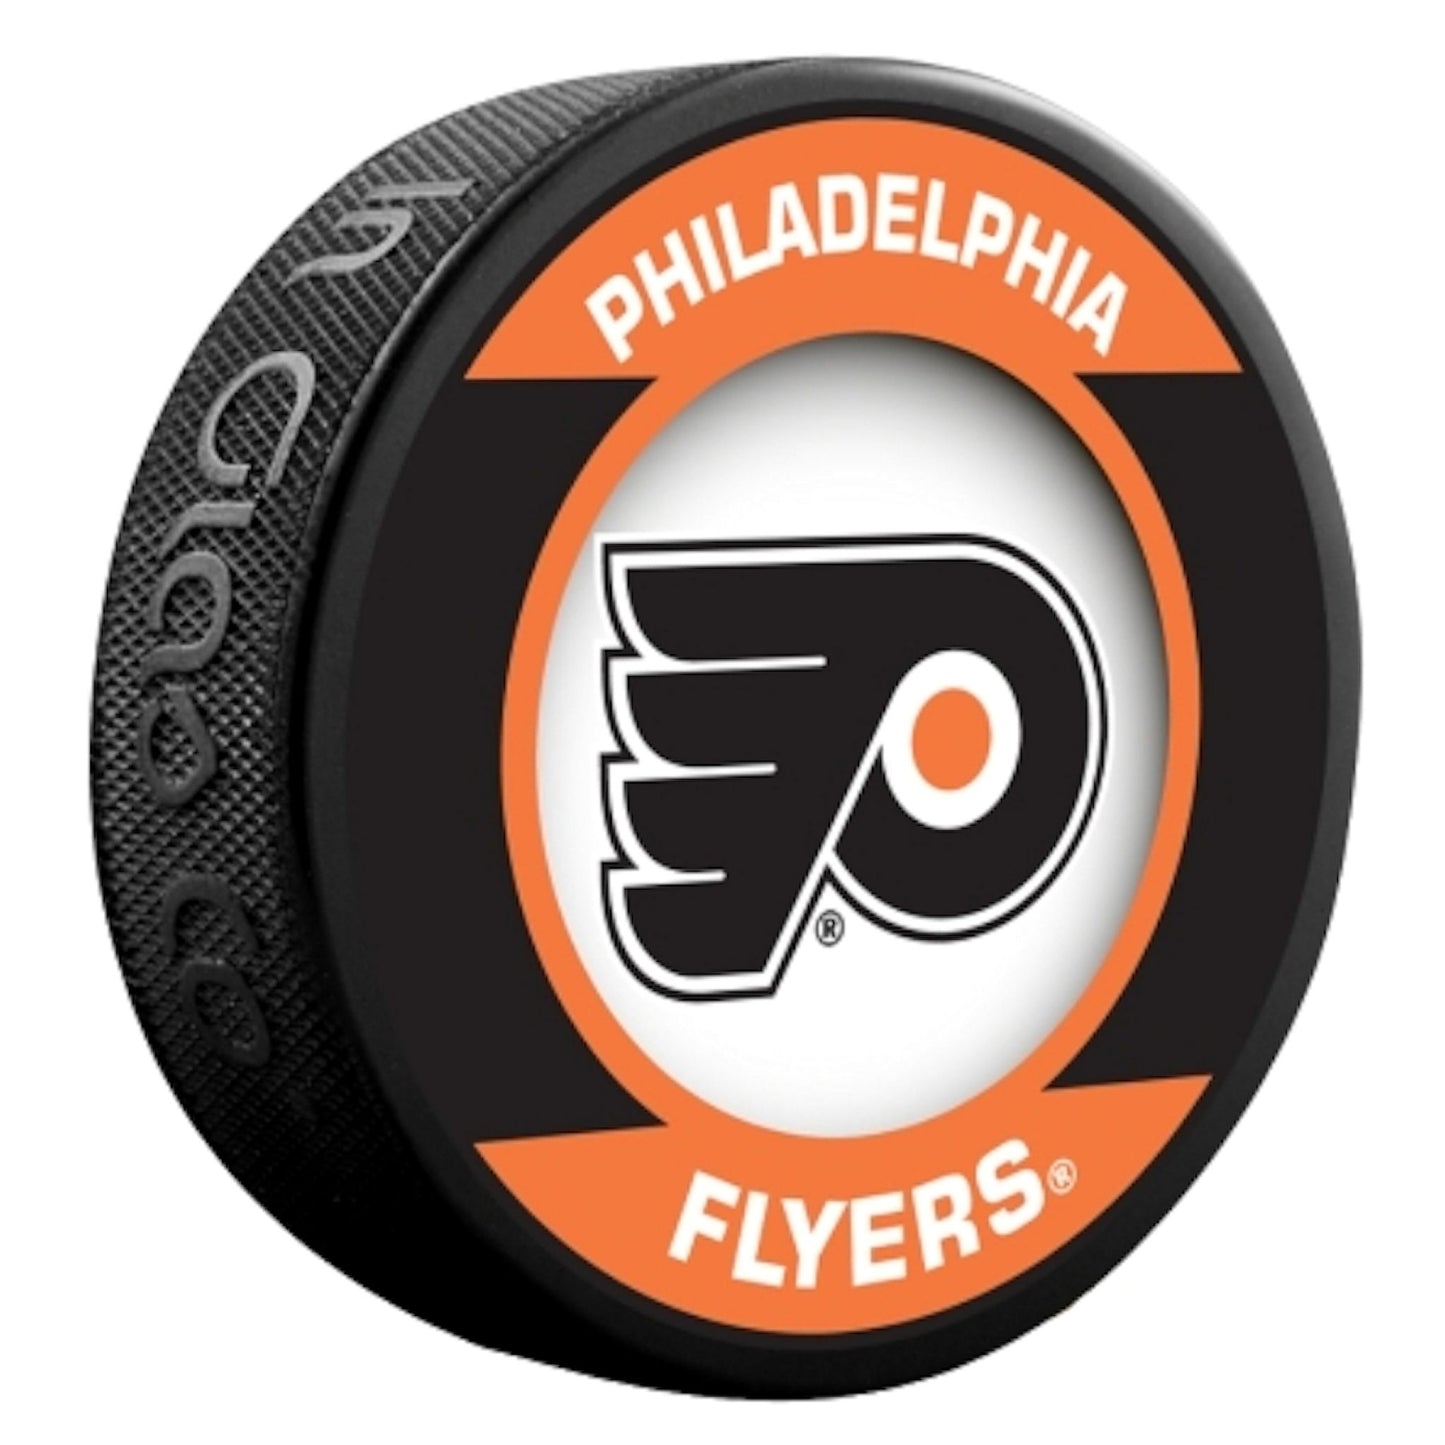 Philadelphia Flyers Retro Series Collectible Hockey Puck